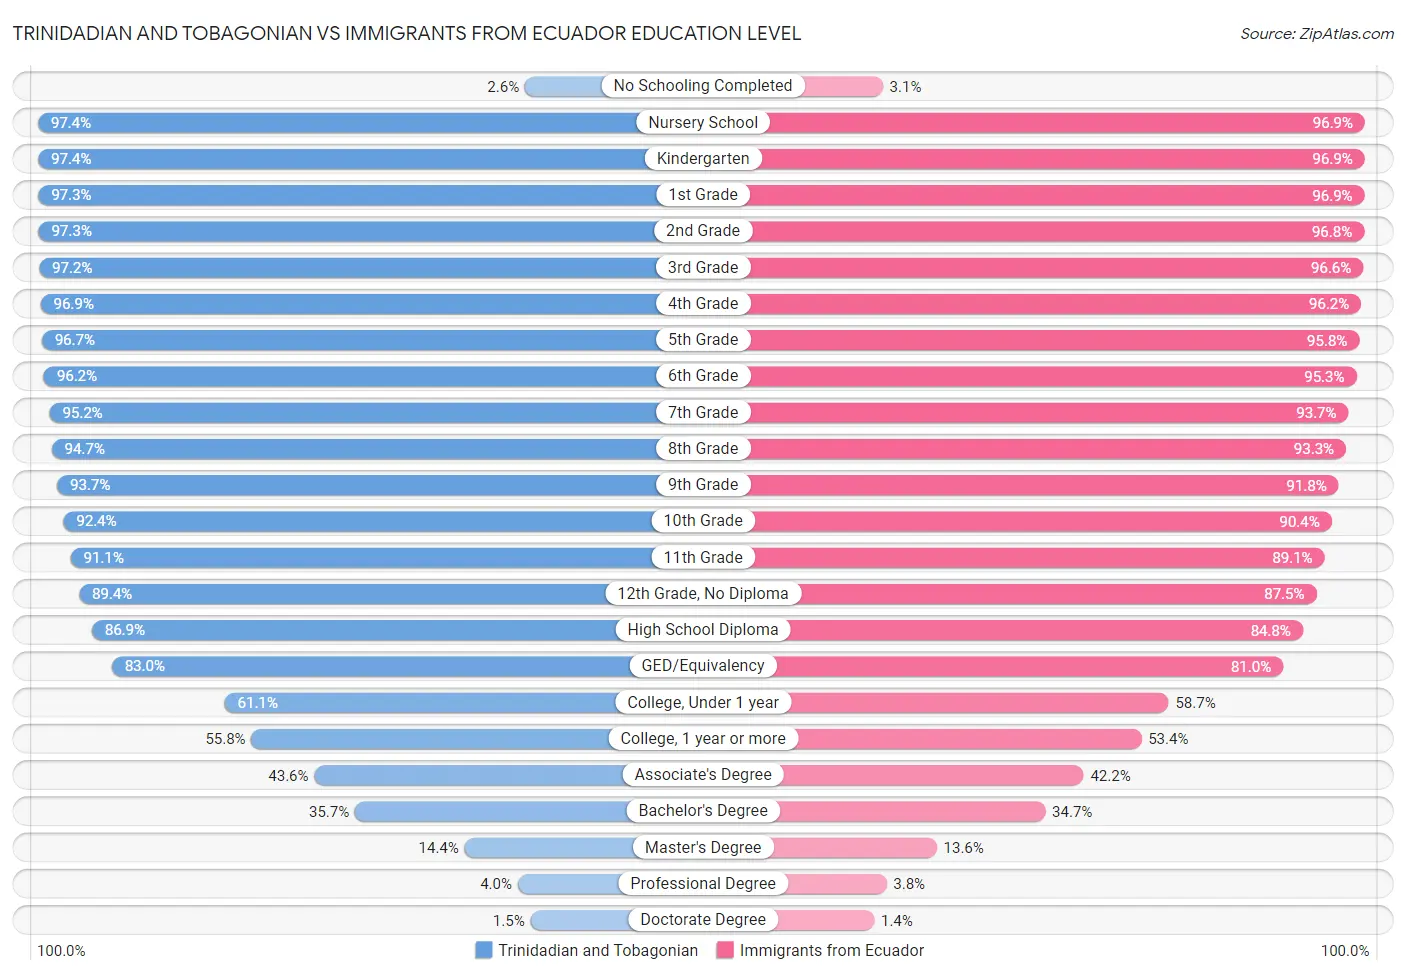 Trinidadian and Tobagonian vs Immigrants from Ecuador Education Level